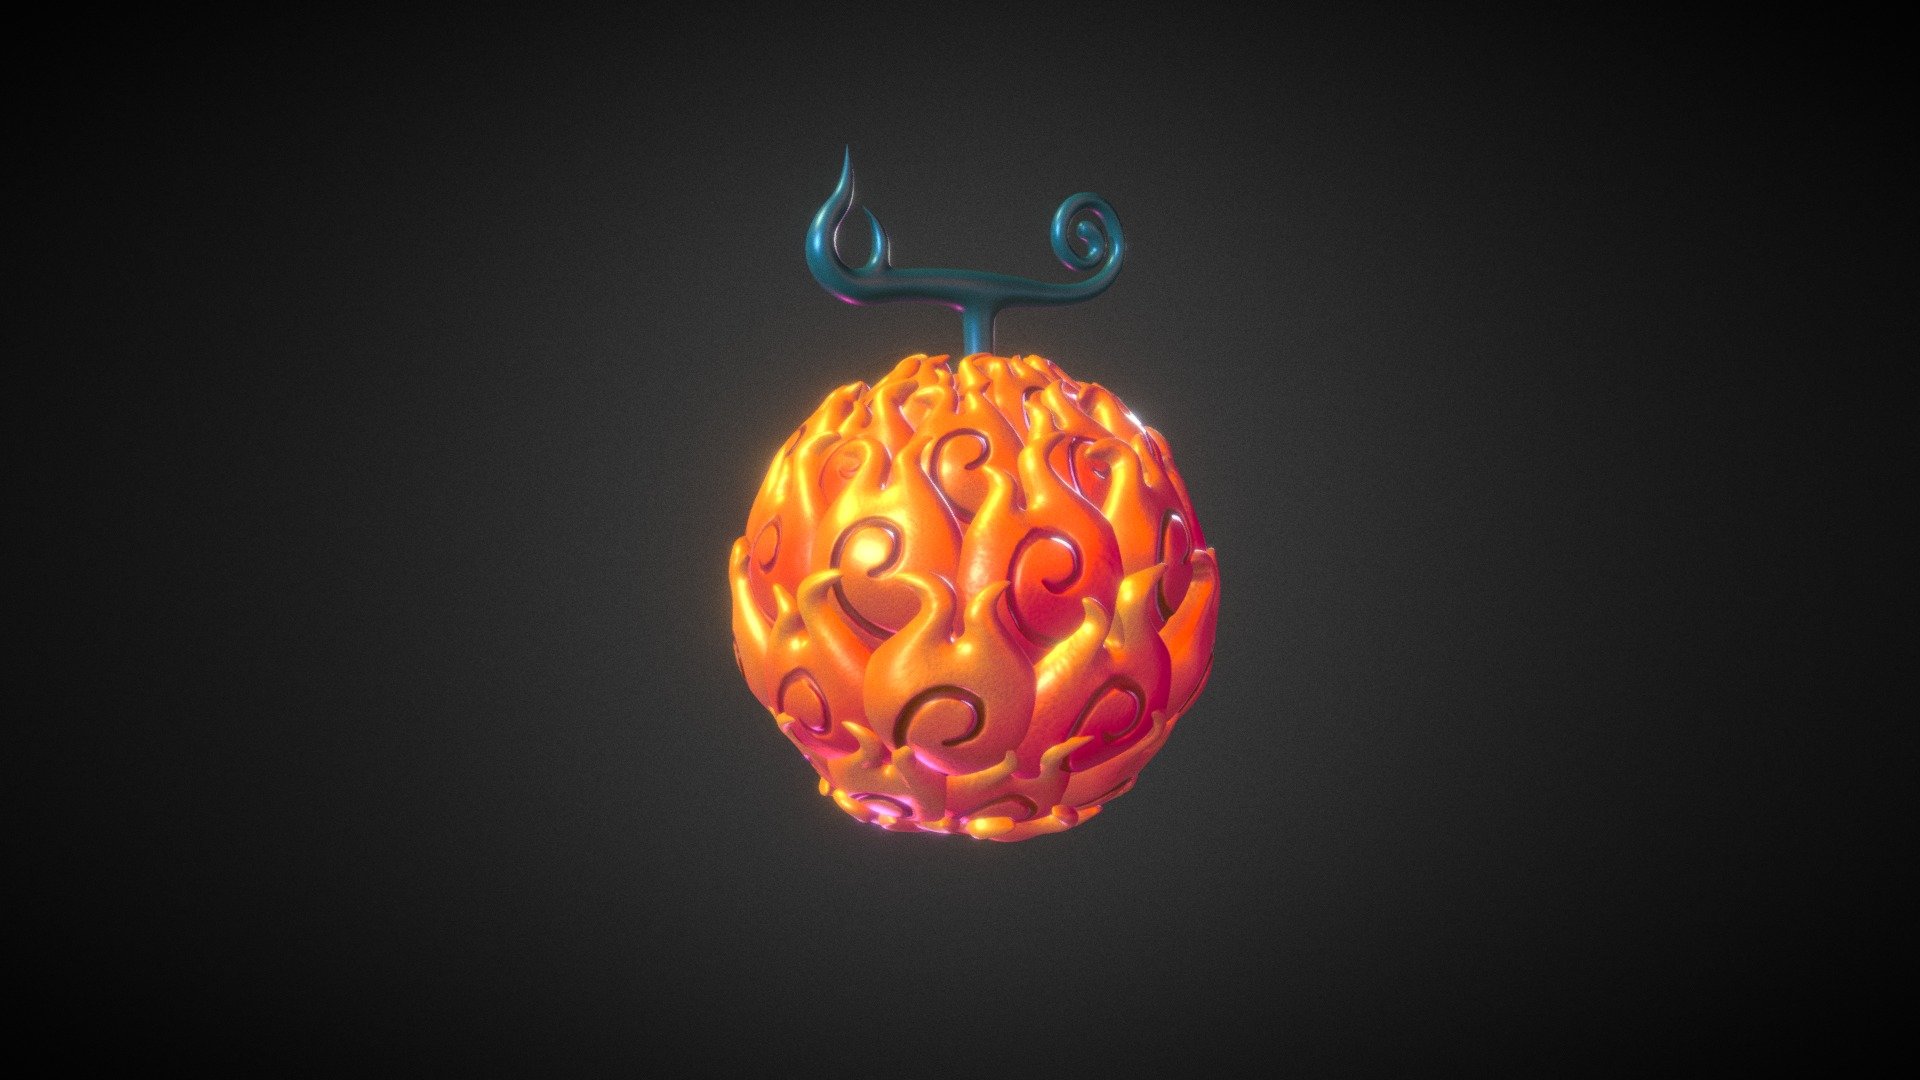 Kiro Kiro No Mi - Download Free 3D model by devil fruit (@devil_fruit)  [1f98418]